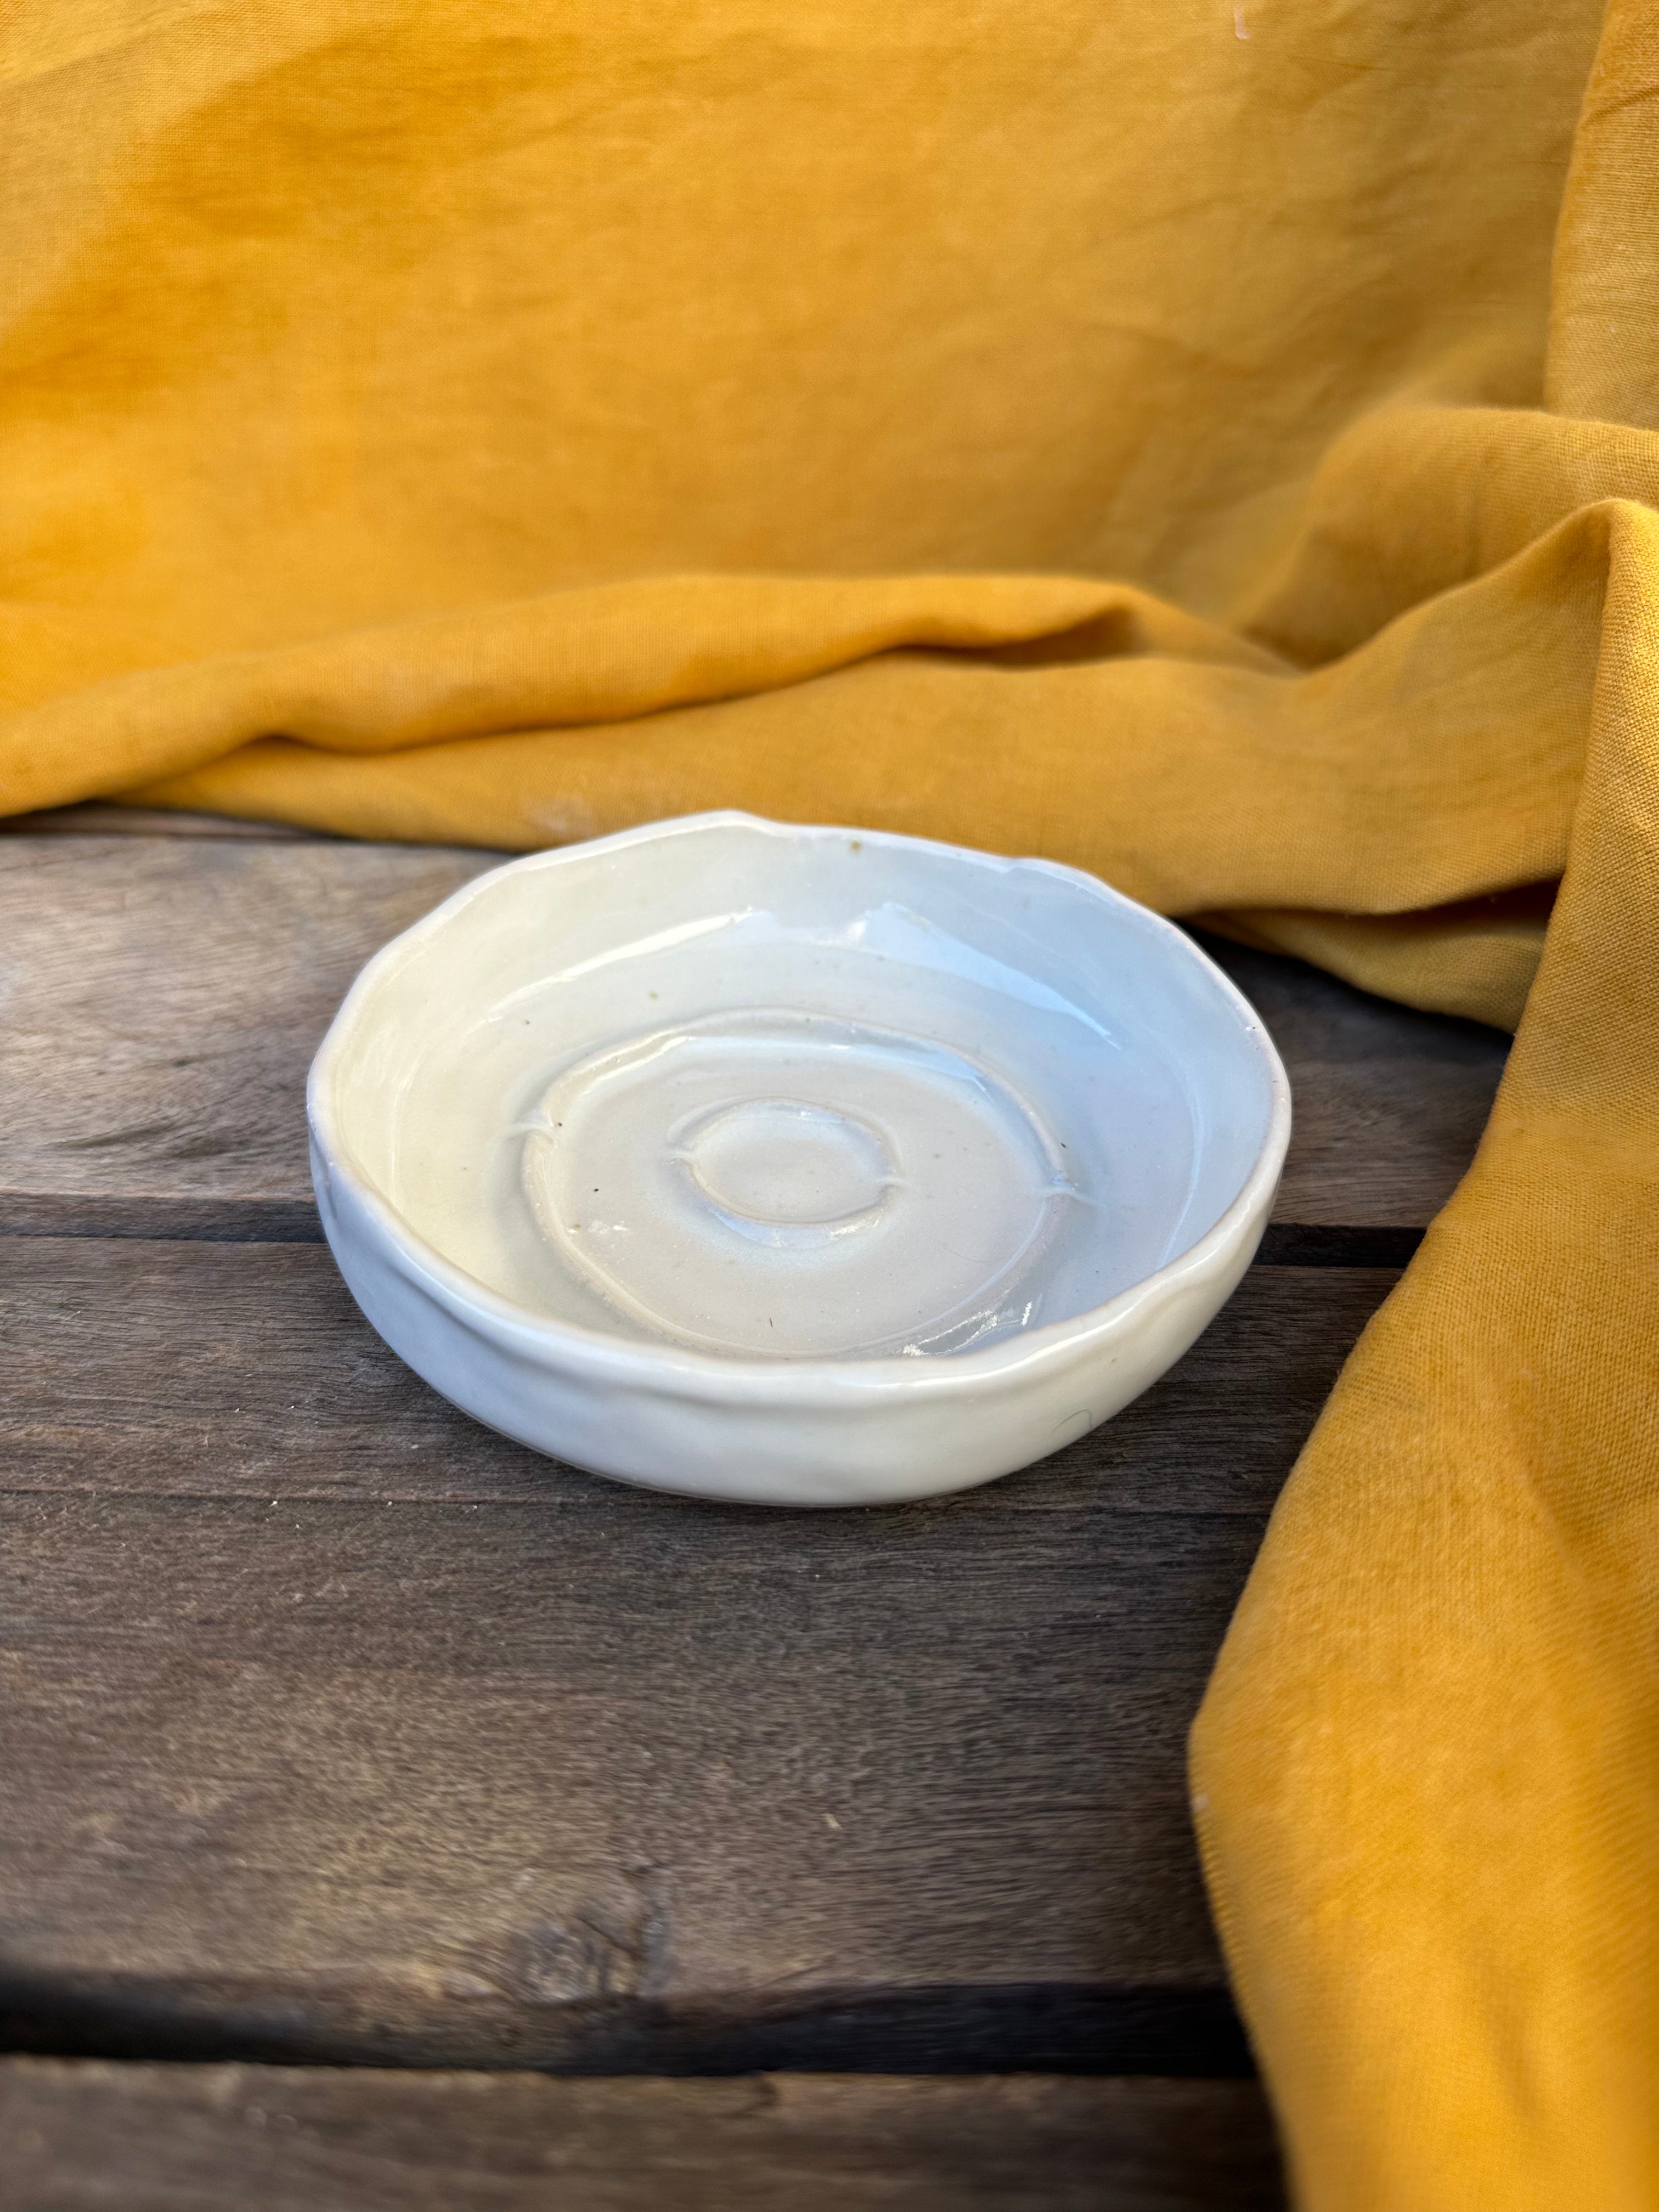 Round white gloss soap dish